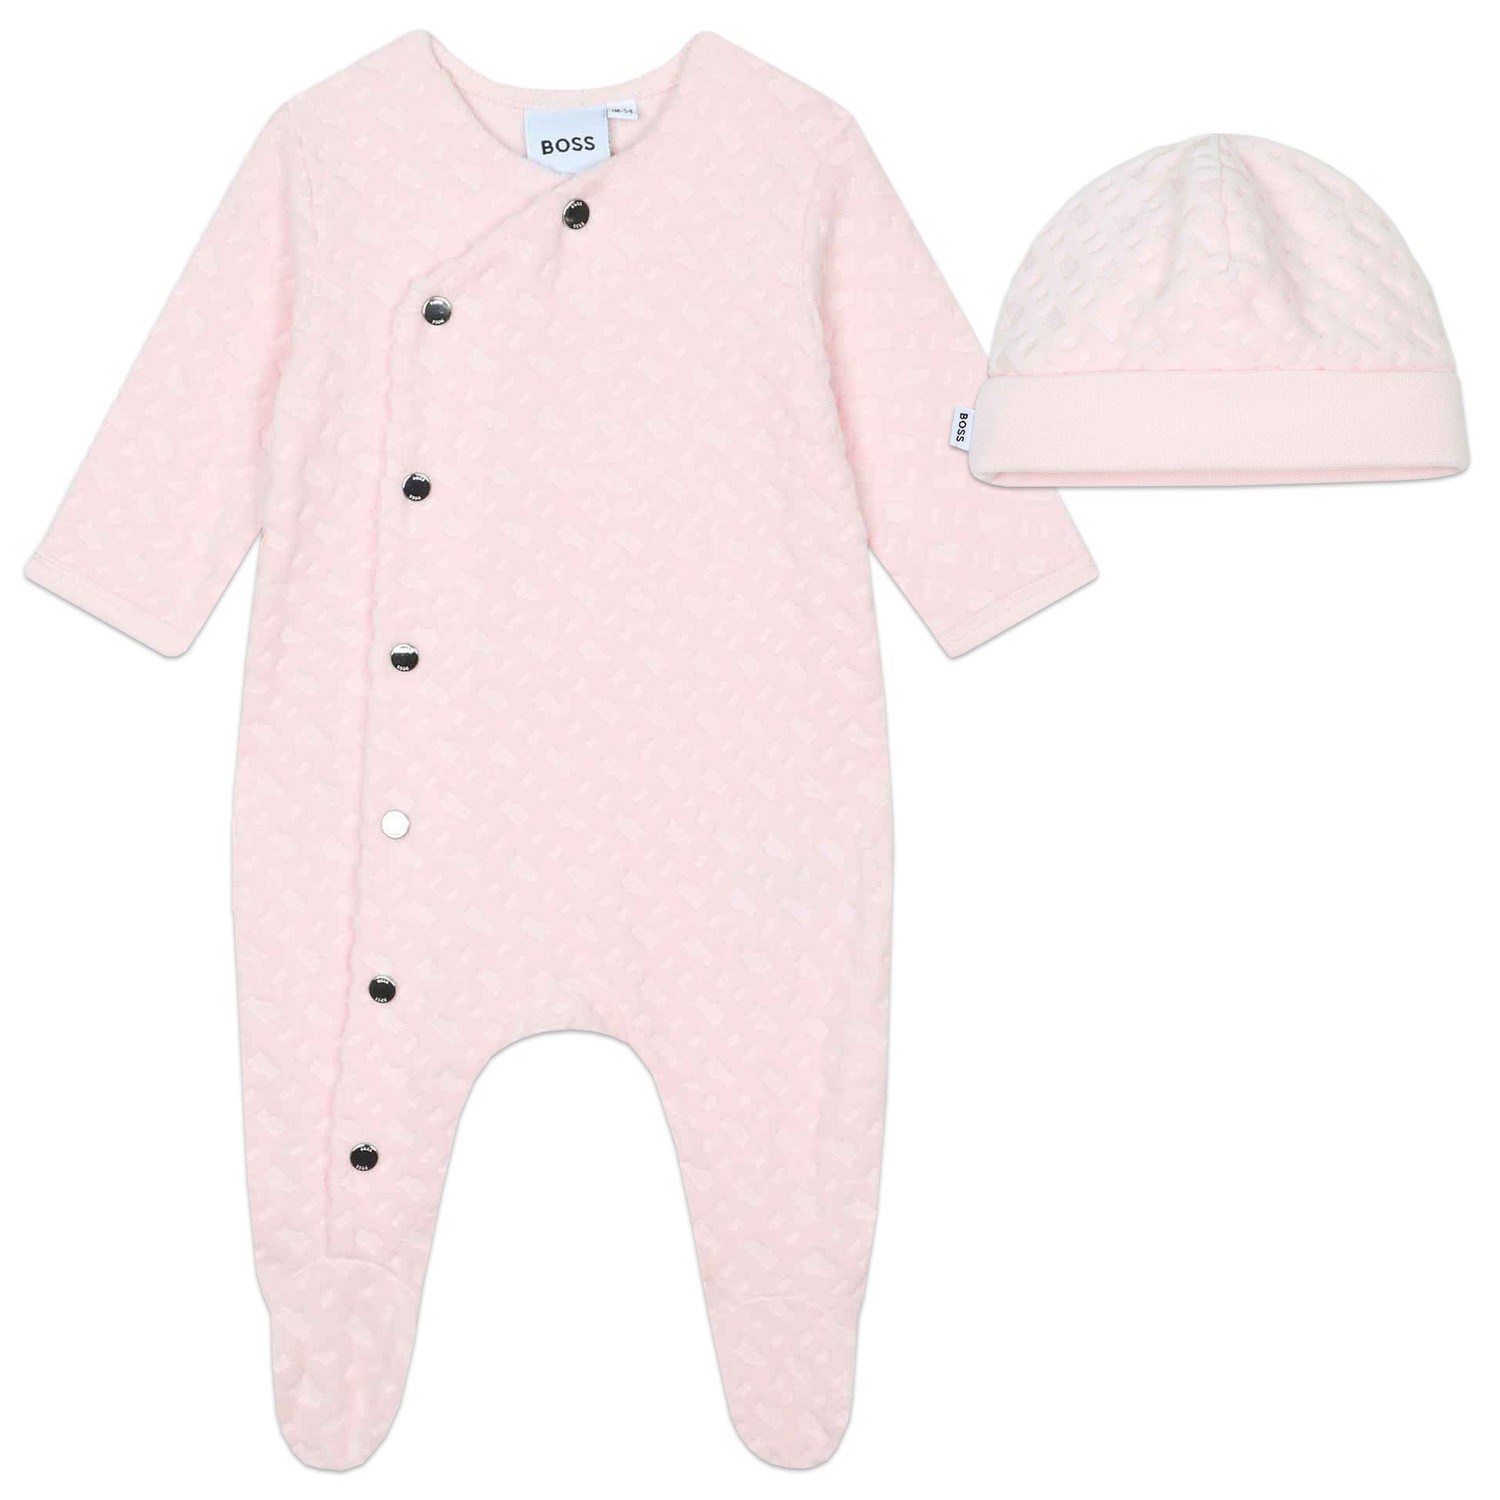 Ensemble Textil 03M Pink Pale 70% Cotton, 30% Polyester - Trimming: 96% 4% Elastane Lining: 95% 5%